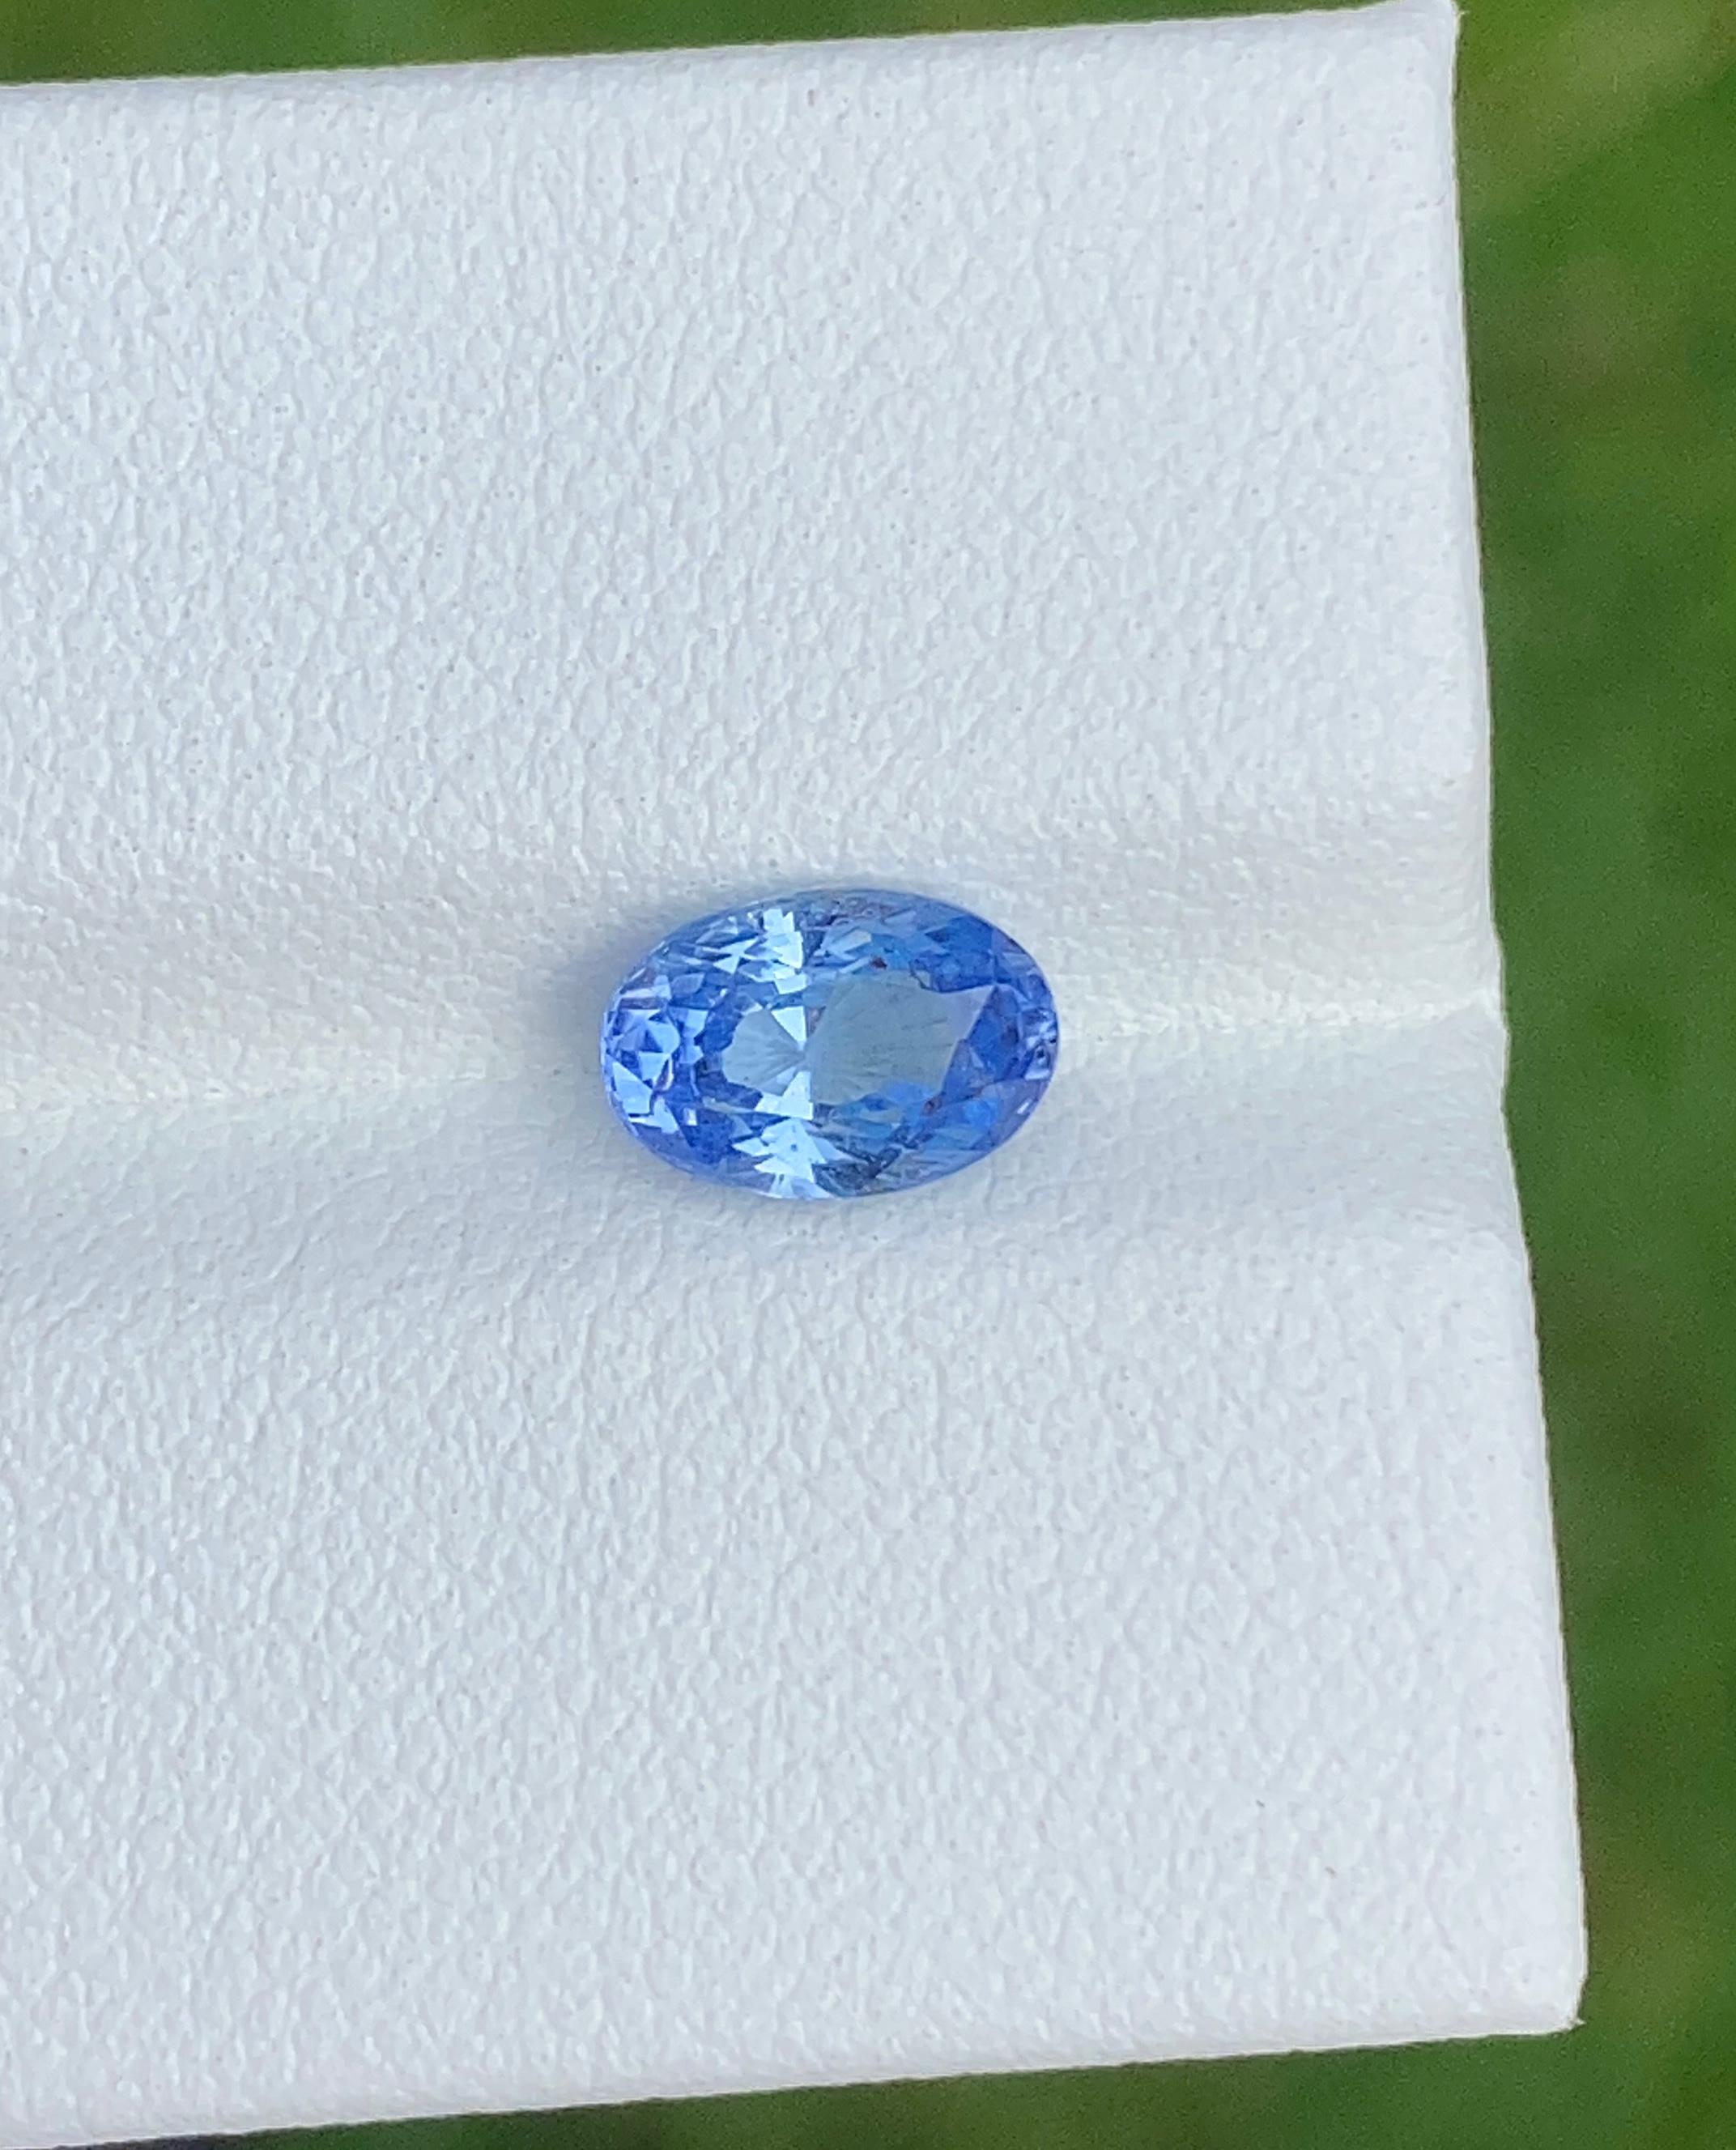 Taille ovale Bague saphir bleu non chauffé certifié, pierre précieuse ovale de 1,25 carat d'origine de Ceylan en vente